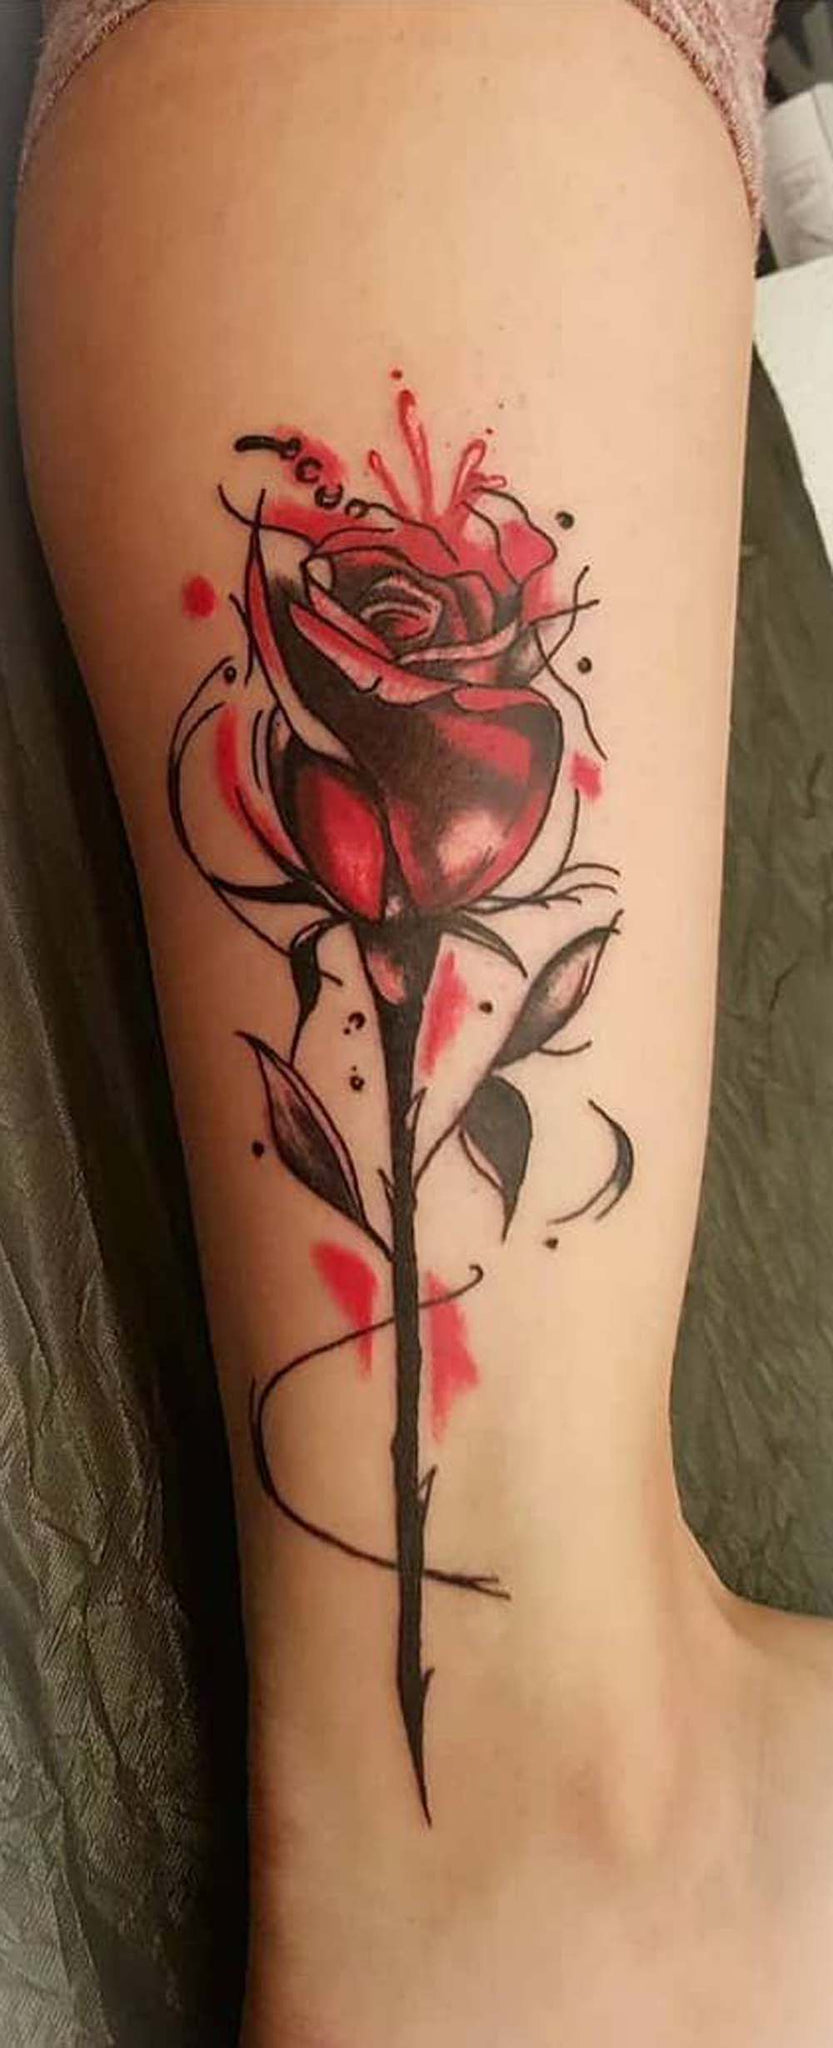 Cute Belle Beauty and the Beast Rose Floral Flower Arm Sleeve Tattoo Ideas for Women -  ideas de tatuaje de manga de brazo de rosa para mujeres - www.MyBodiArt.com